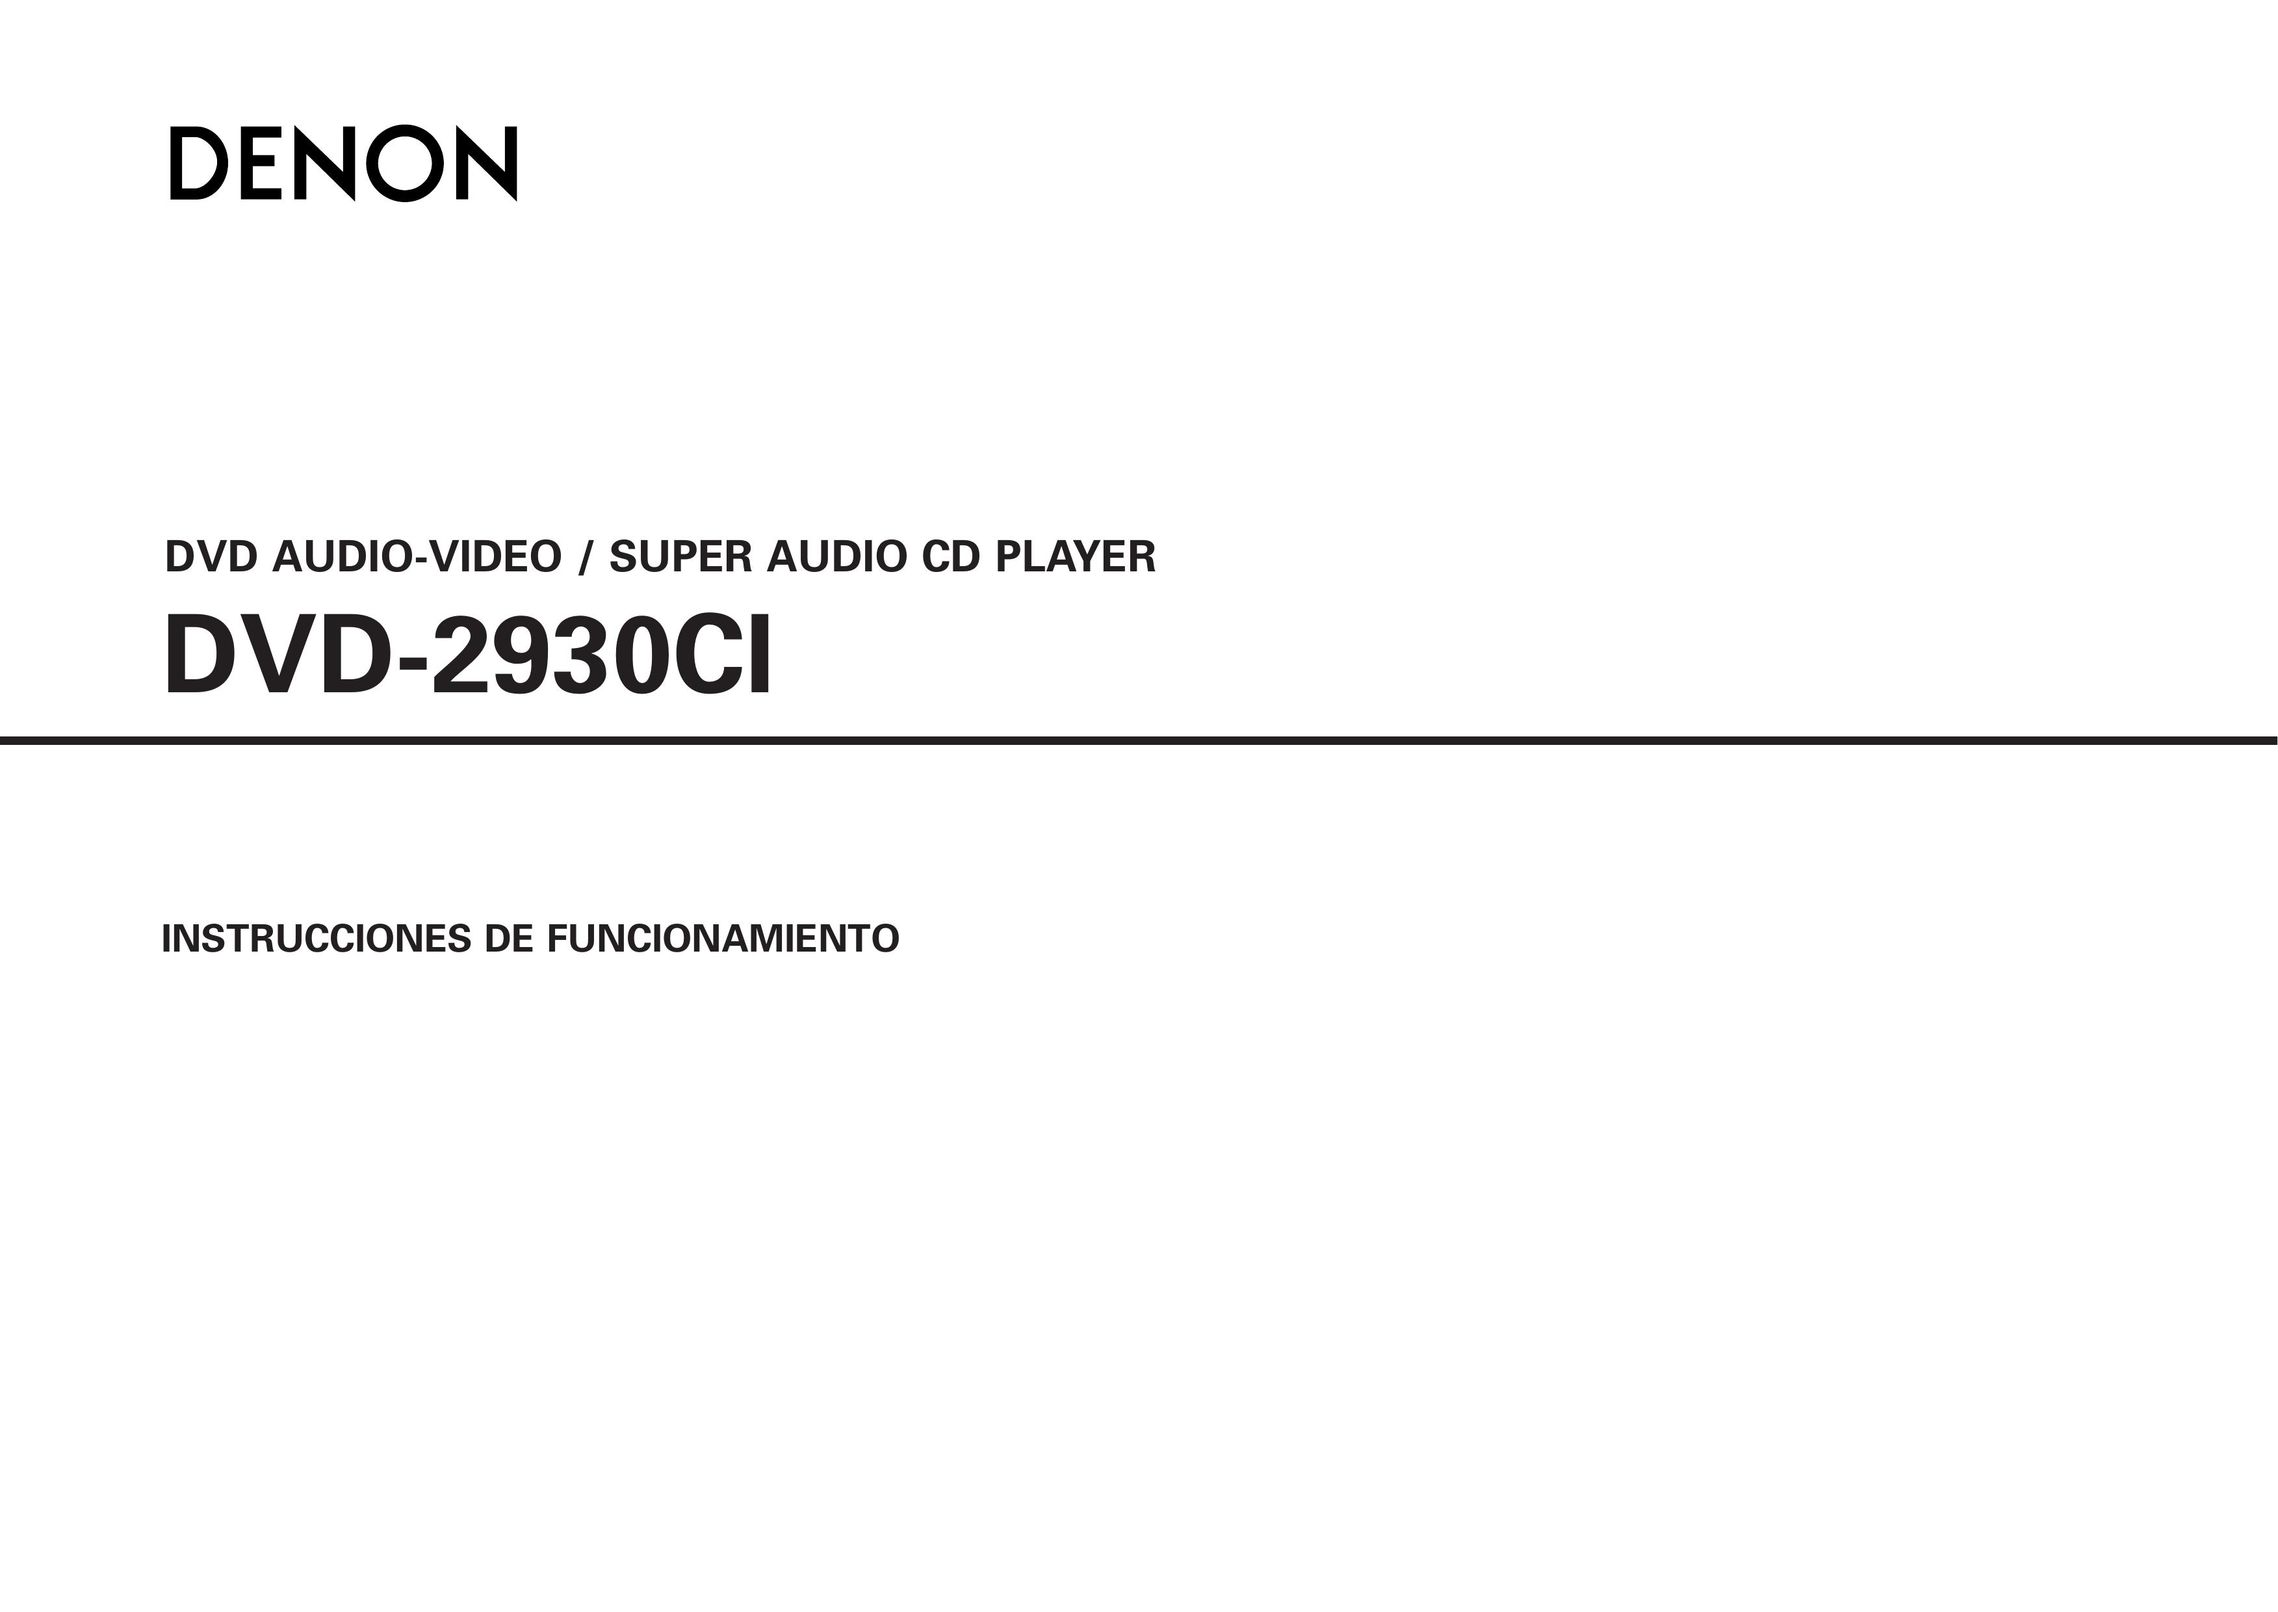 Denon DVD-2930CI DVD Player User Manual